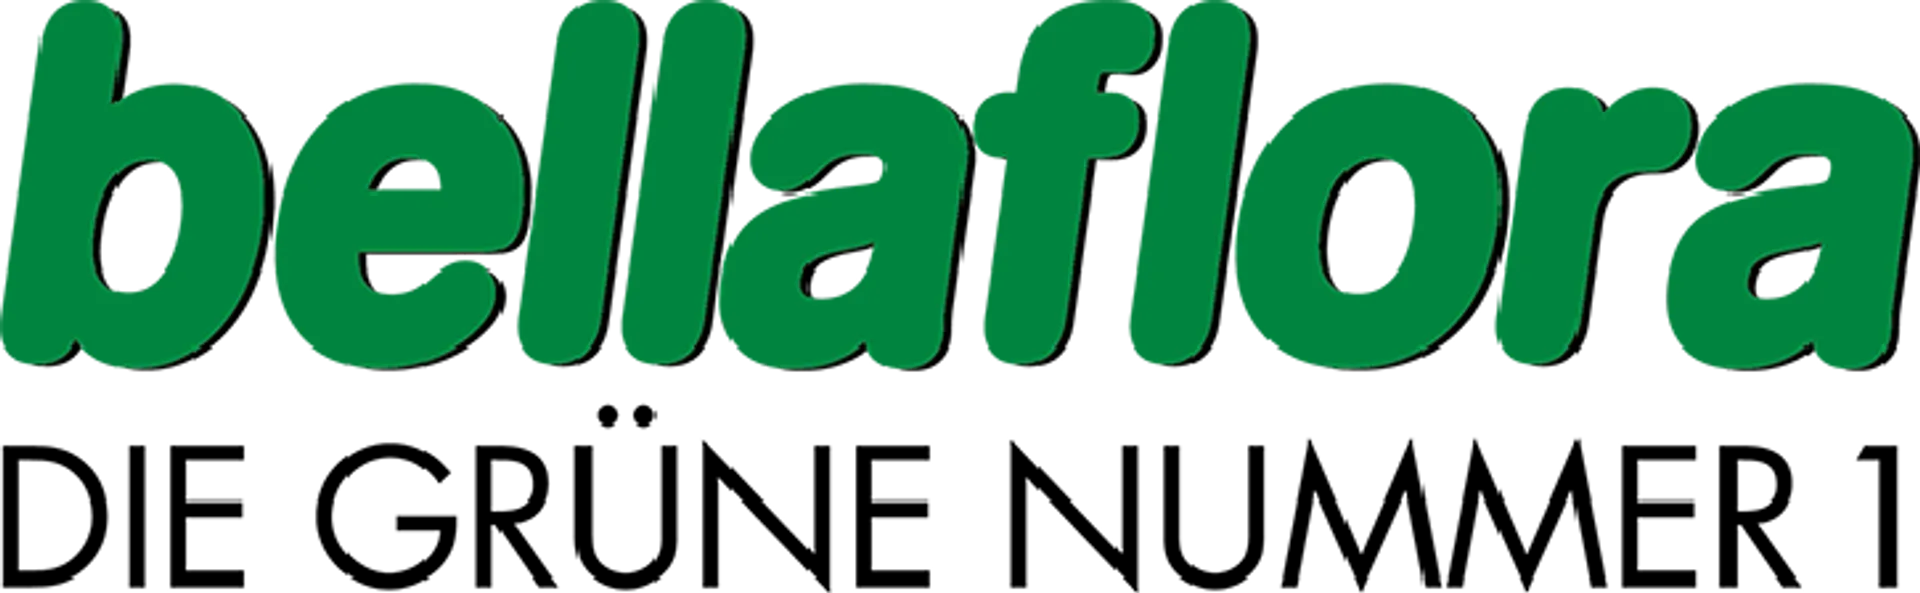 BELLAFLORA logo